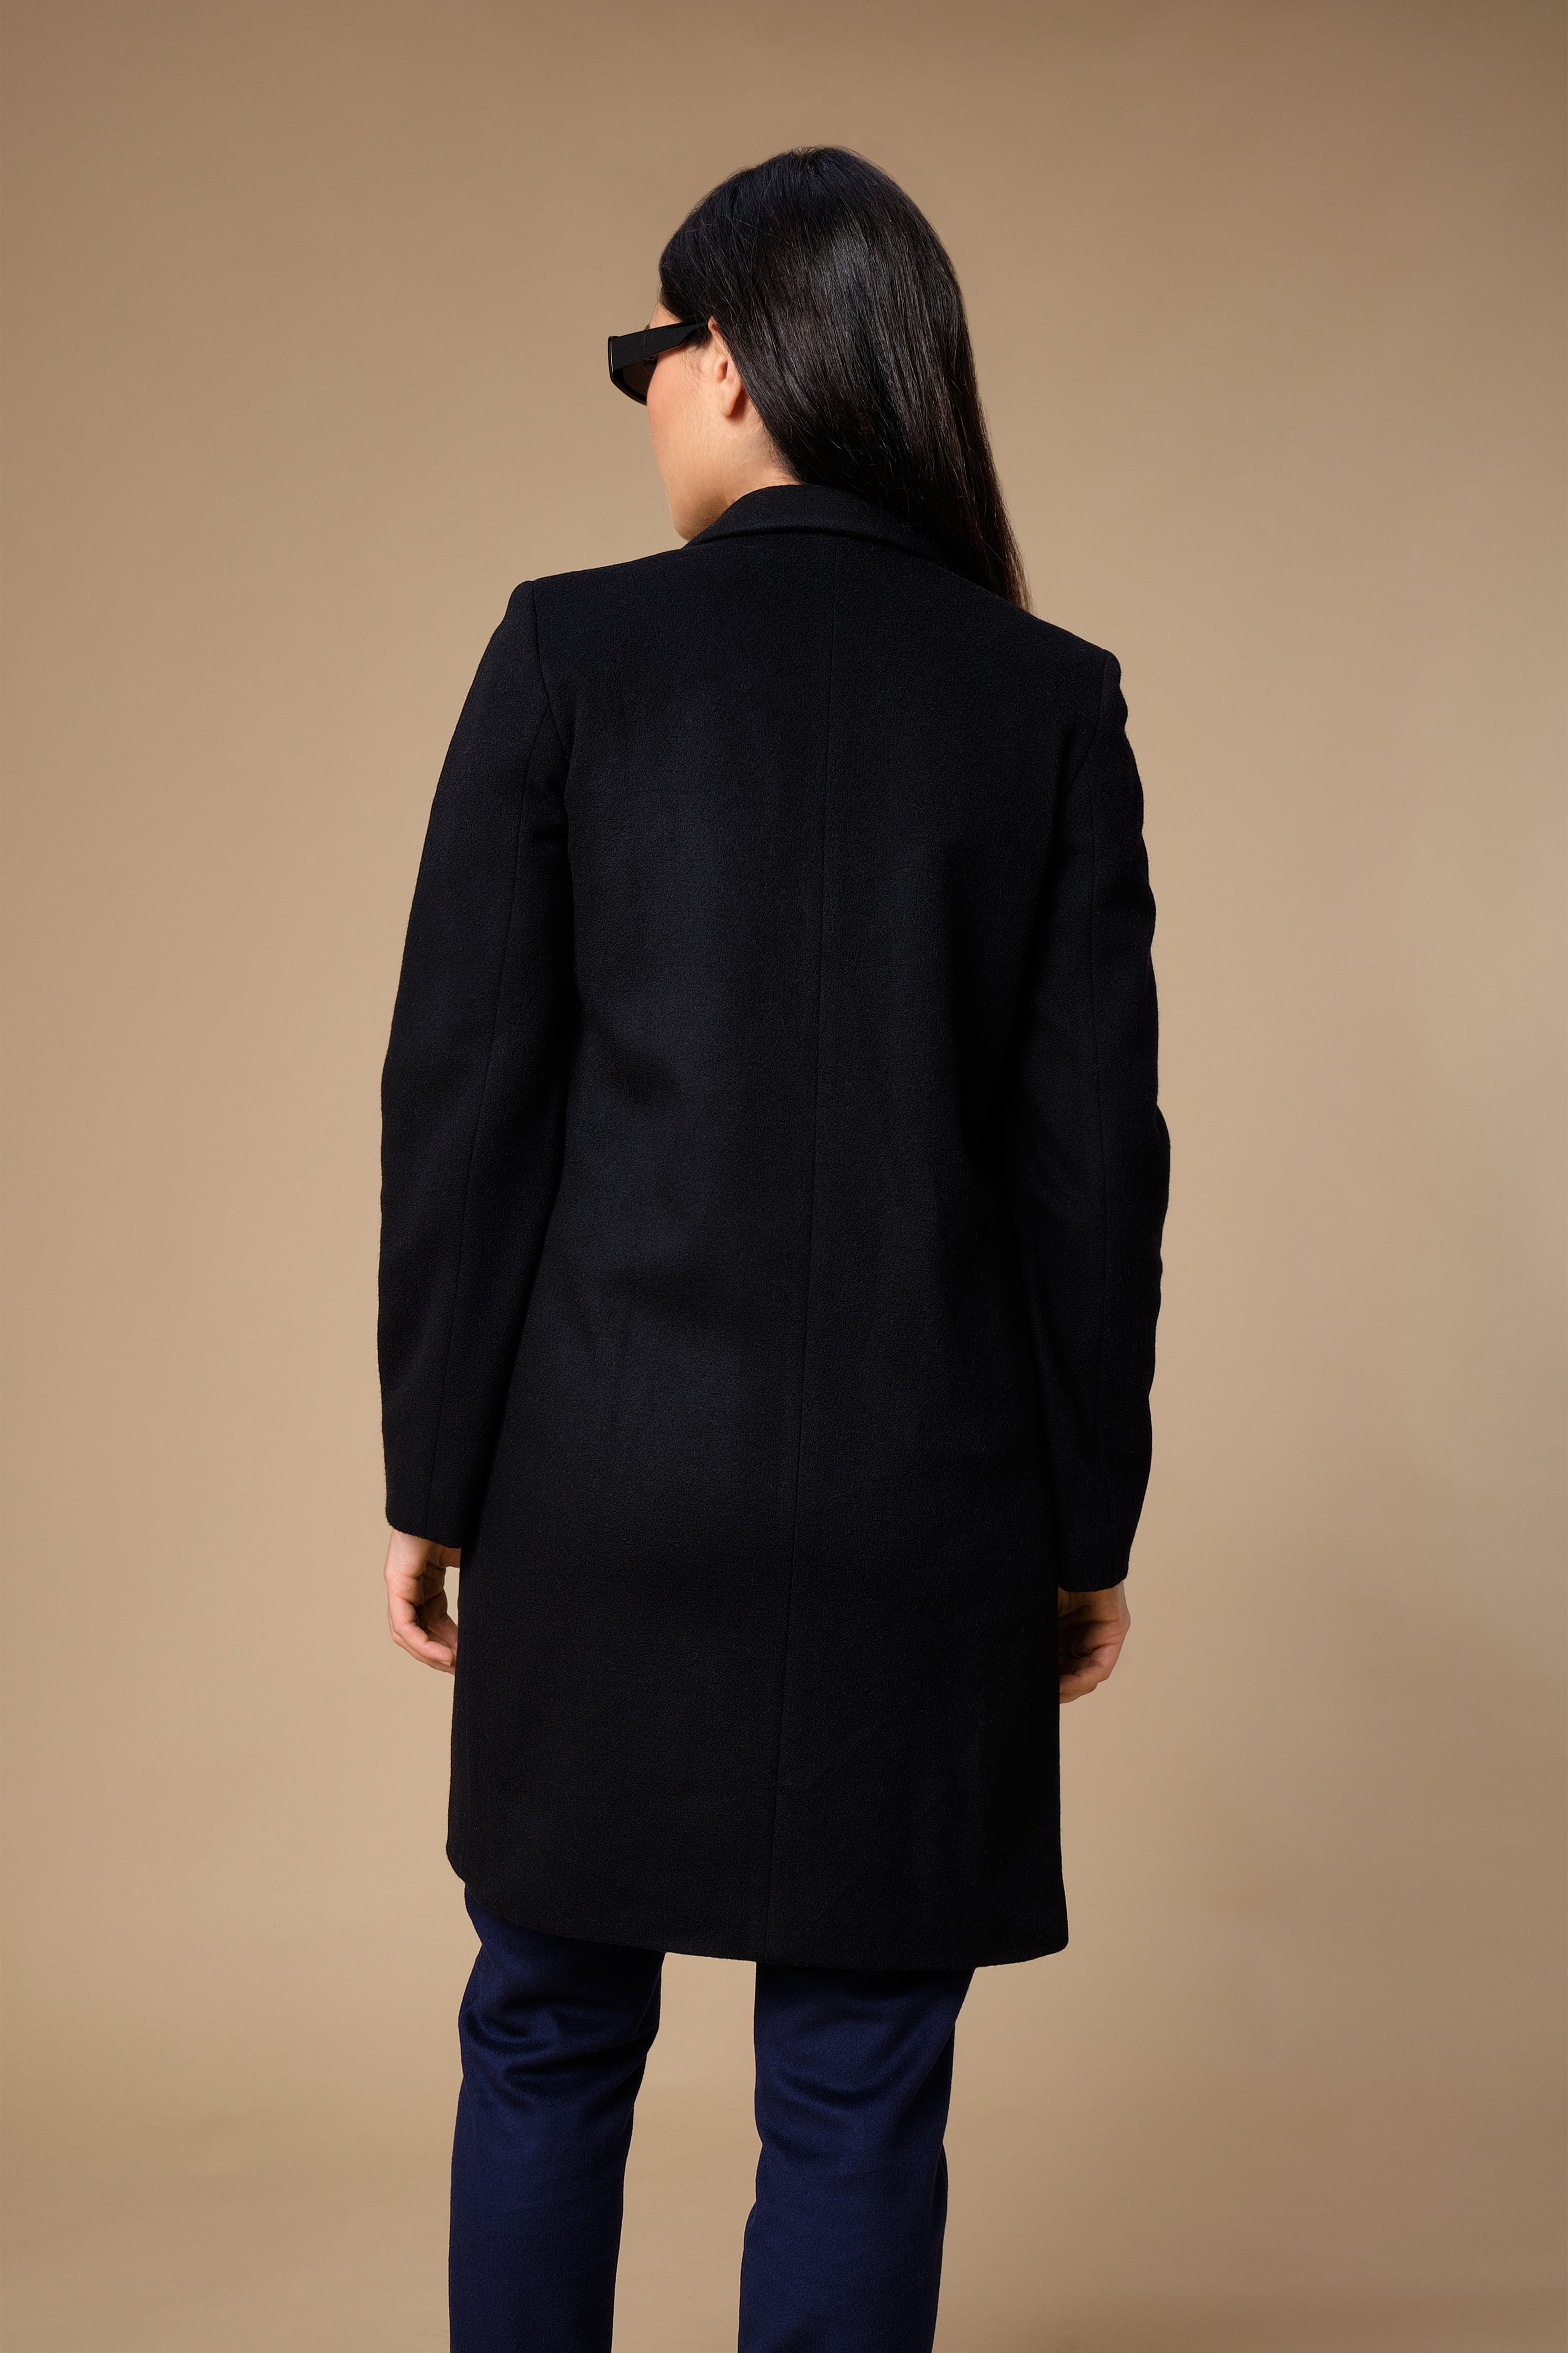 stillsveta black wool coat with blue eyes embroidery